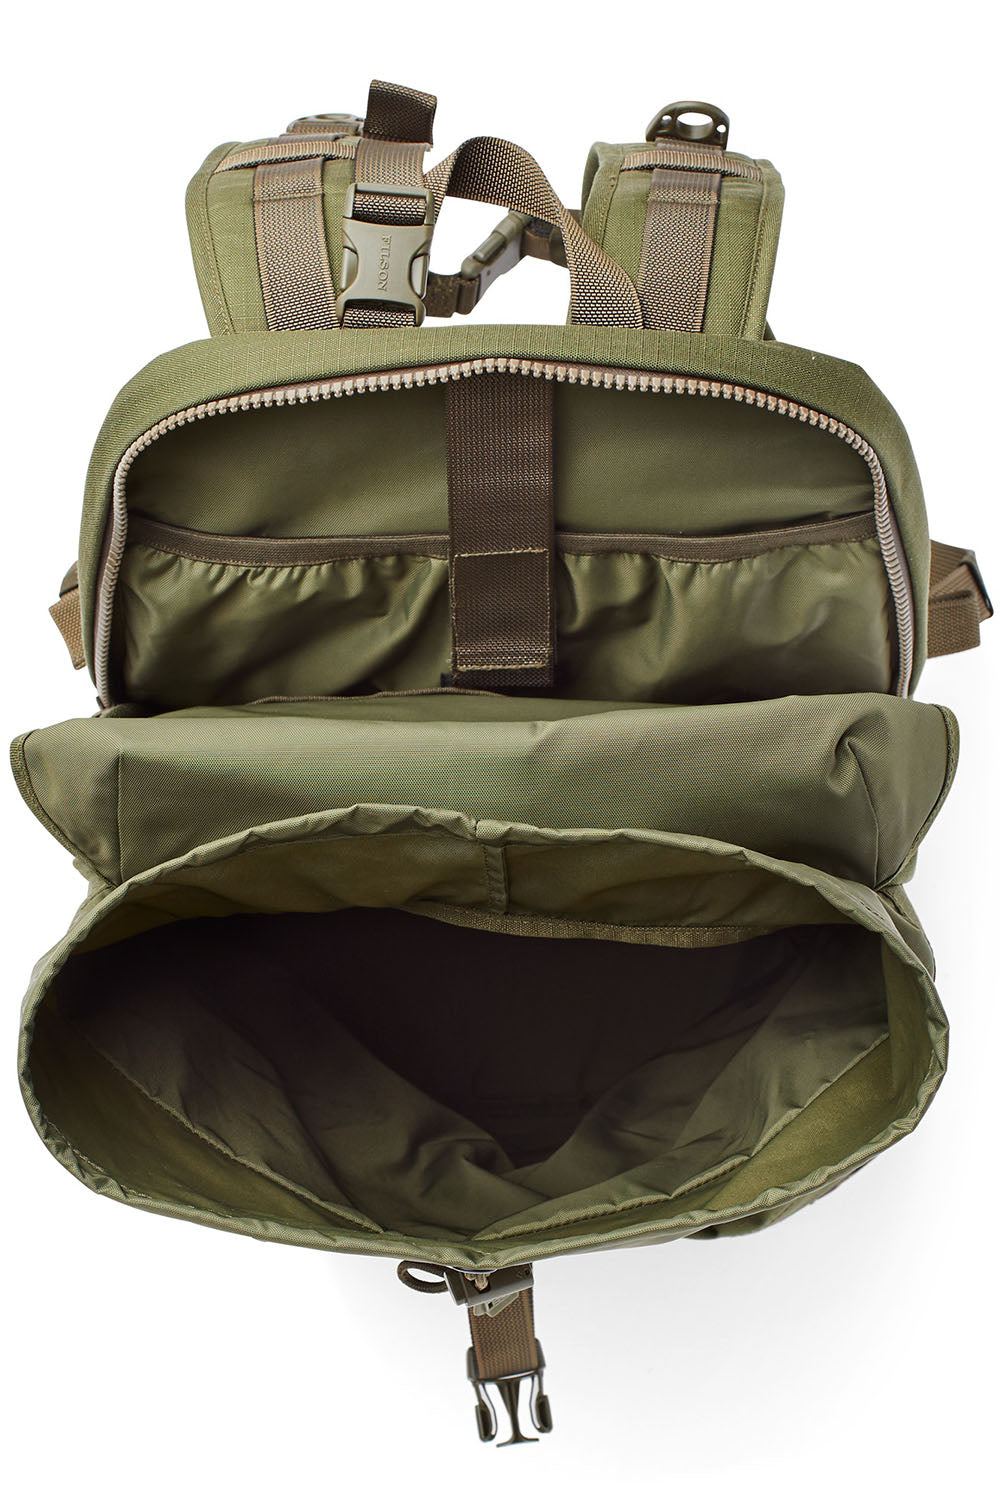 Filson Ripstop Cordura Nylon 35L Backpack (Surplus Green)